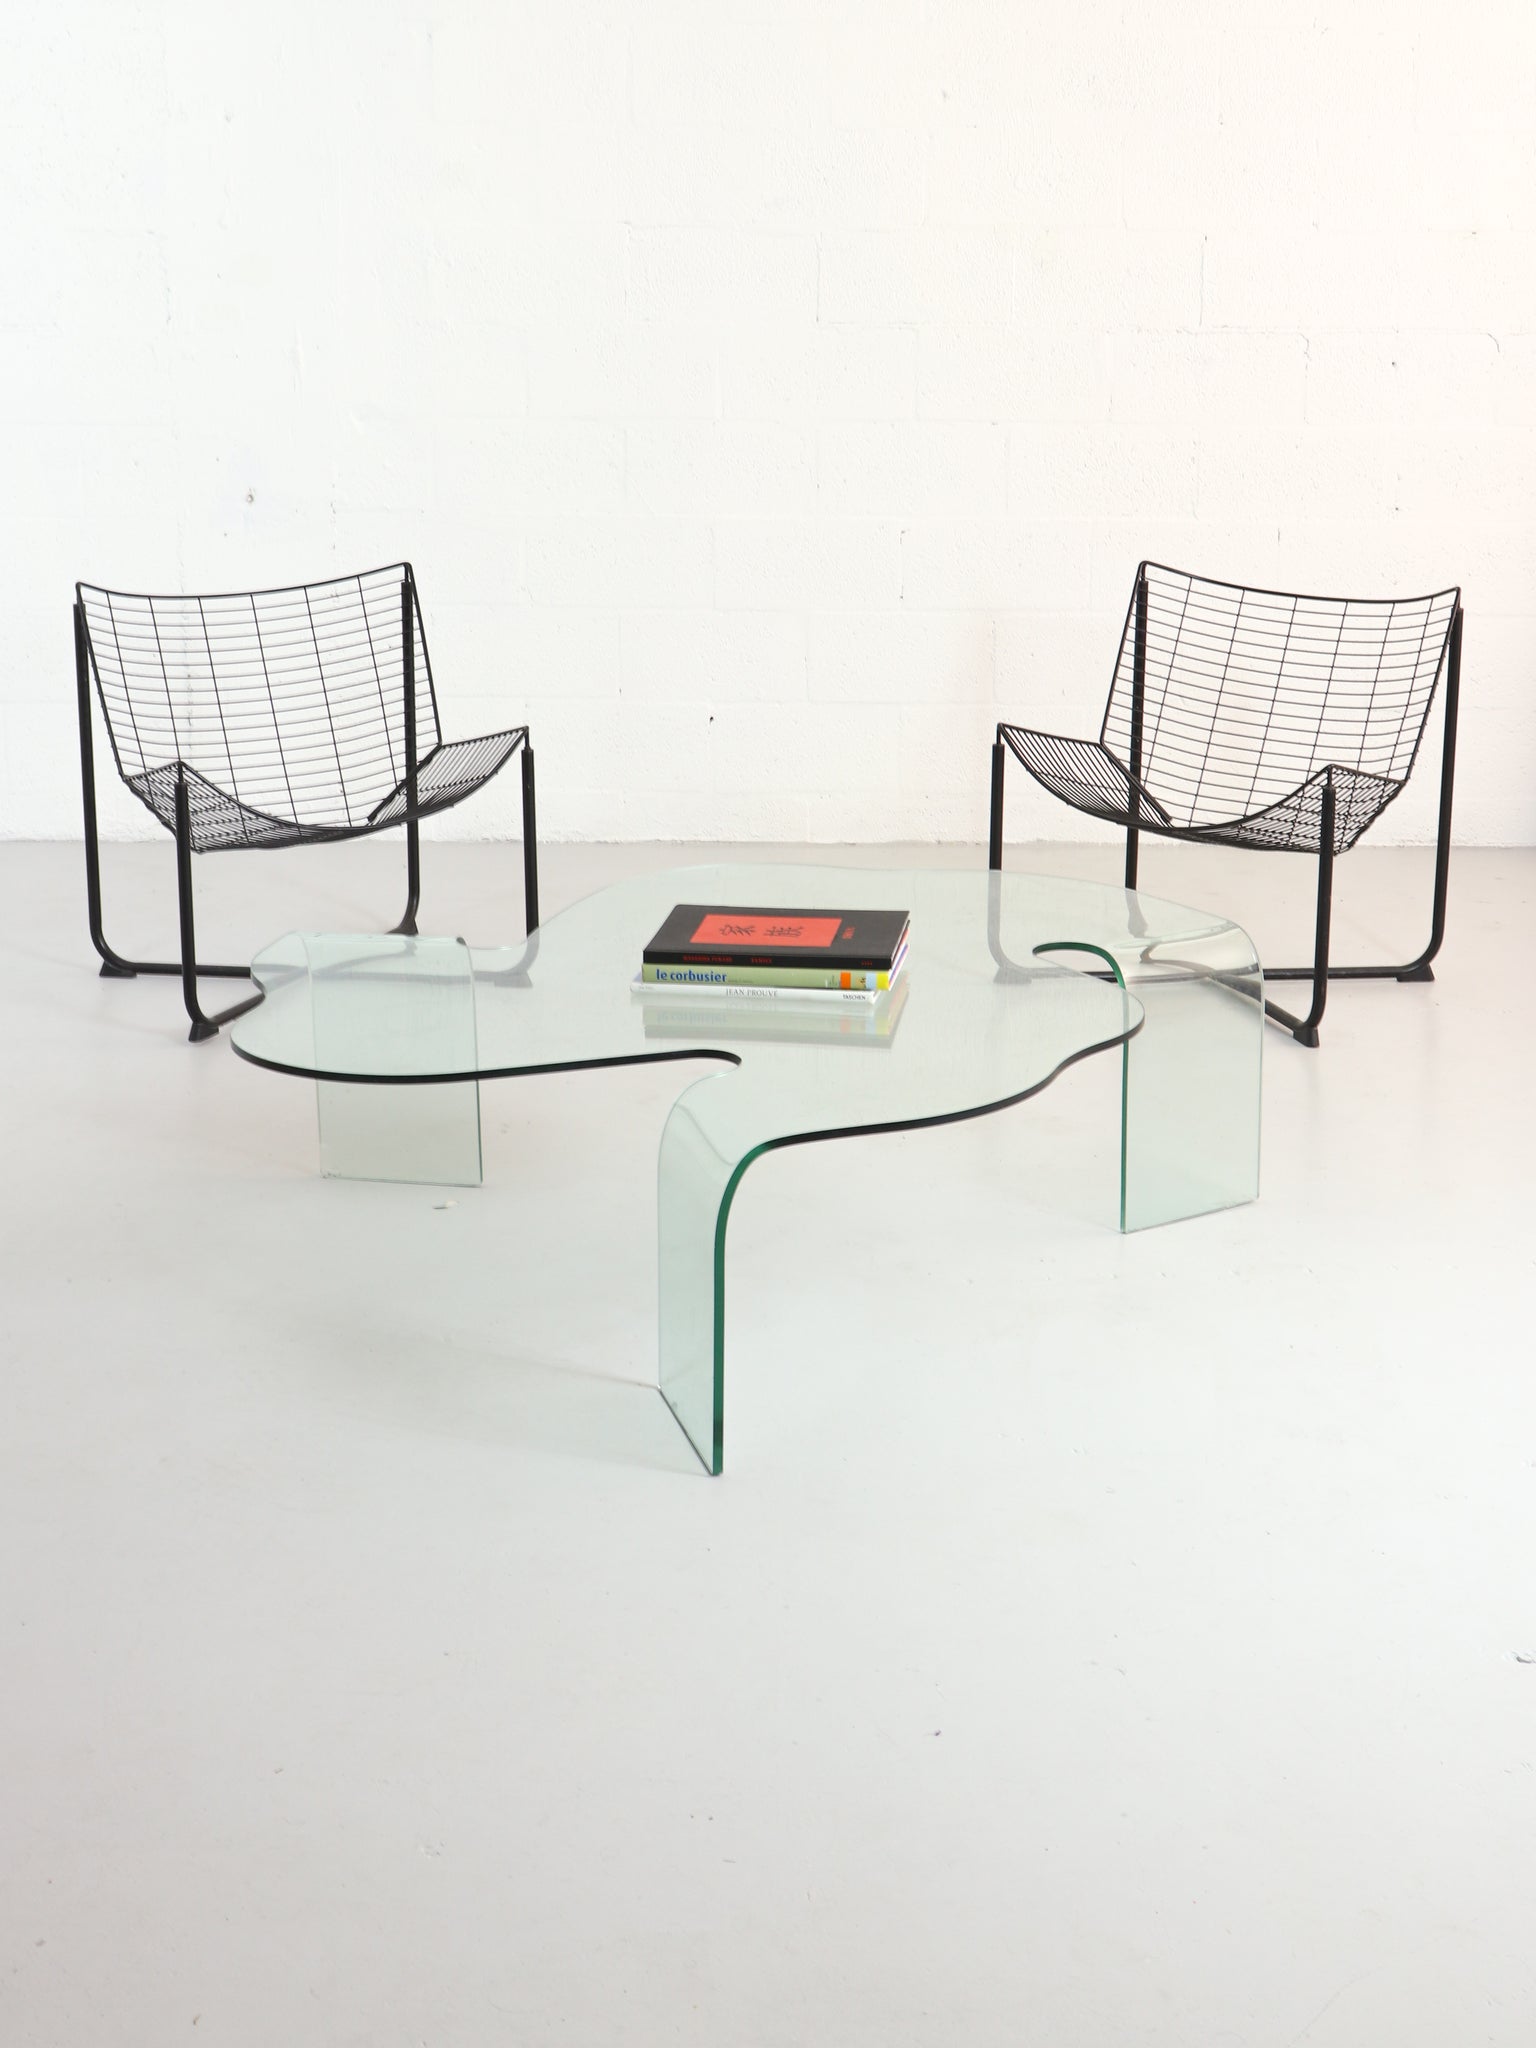 1980s Hans von Klier for Fiam glass coffee table